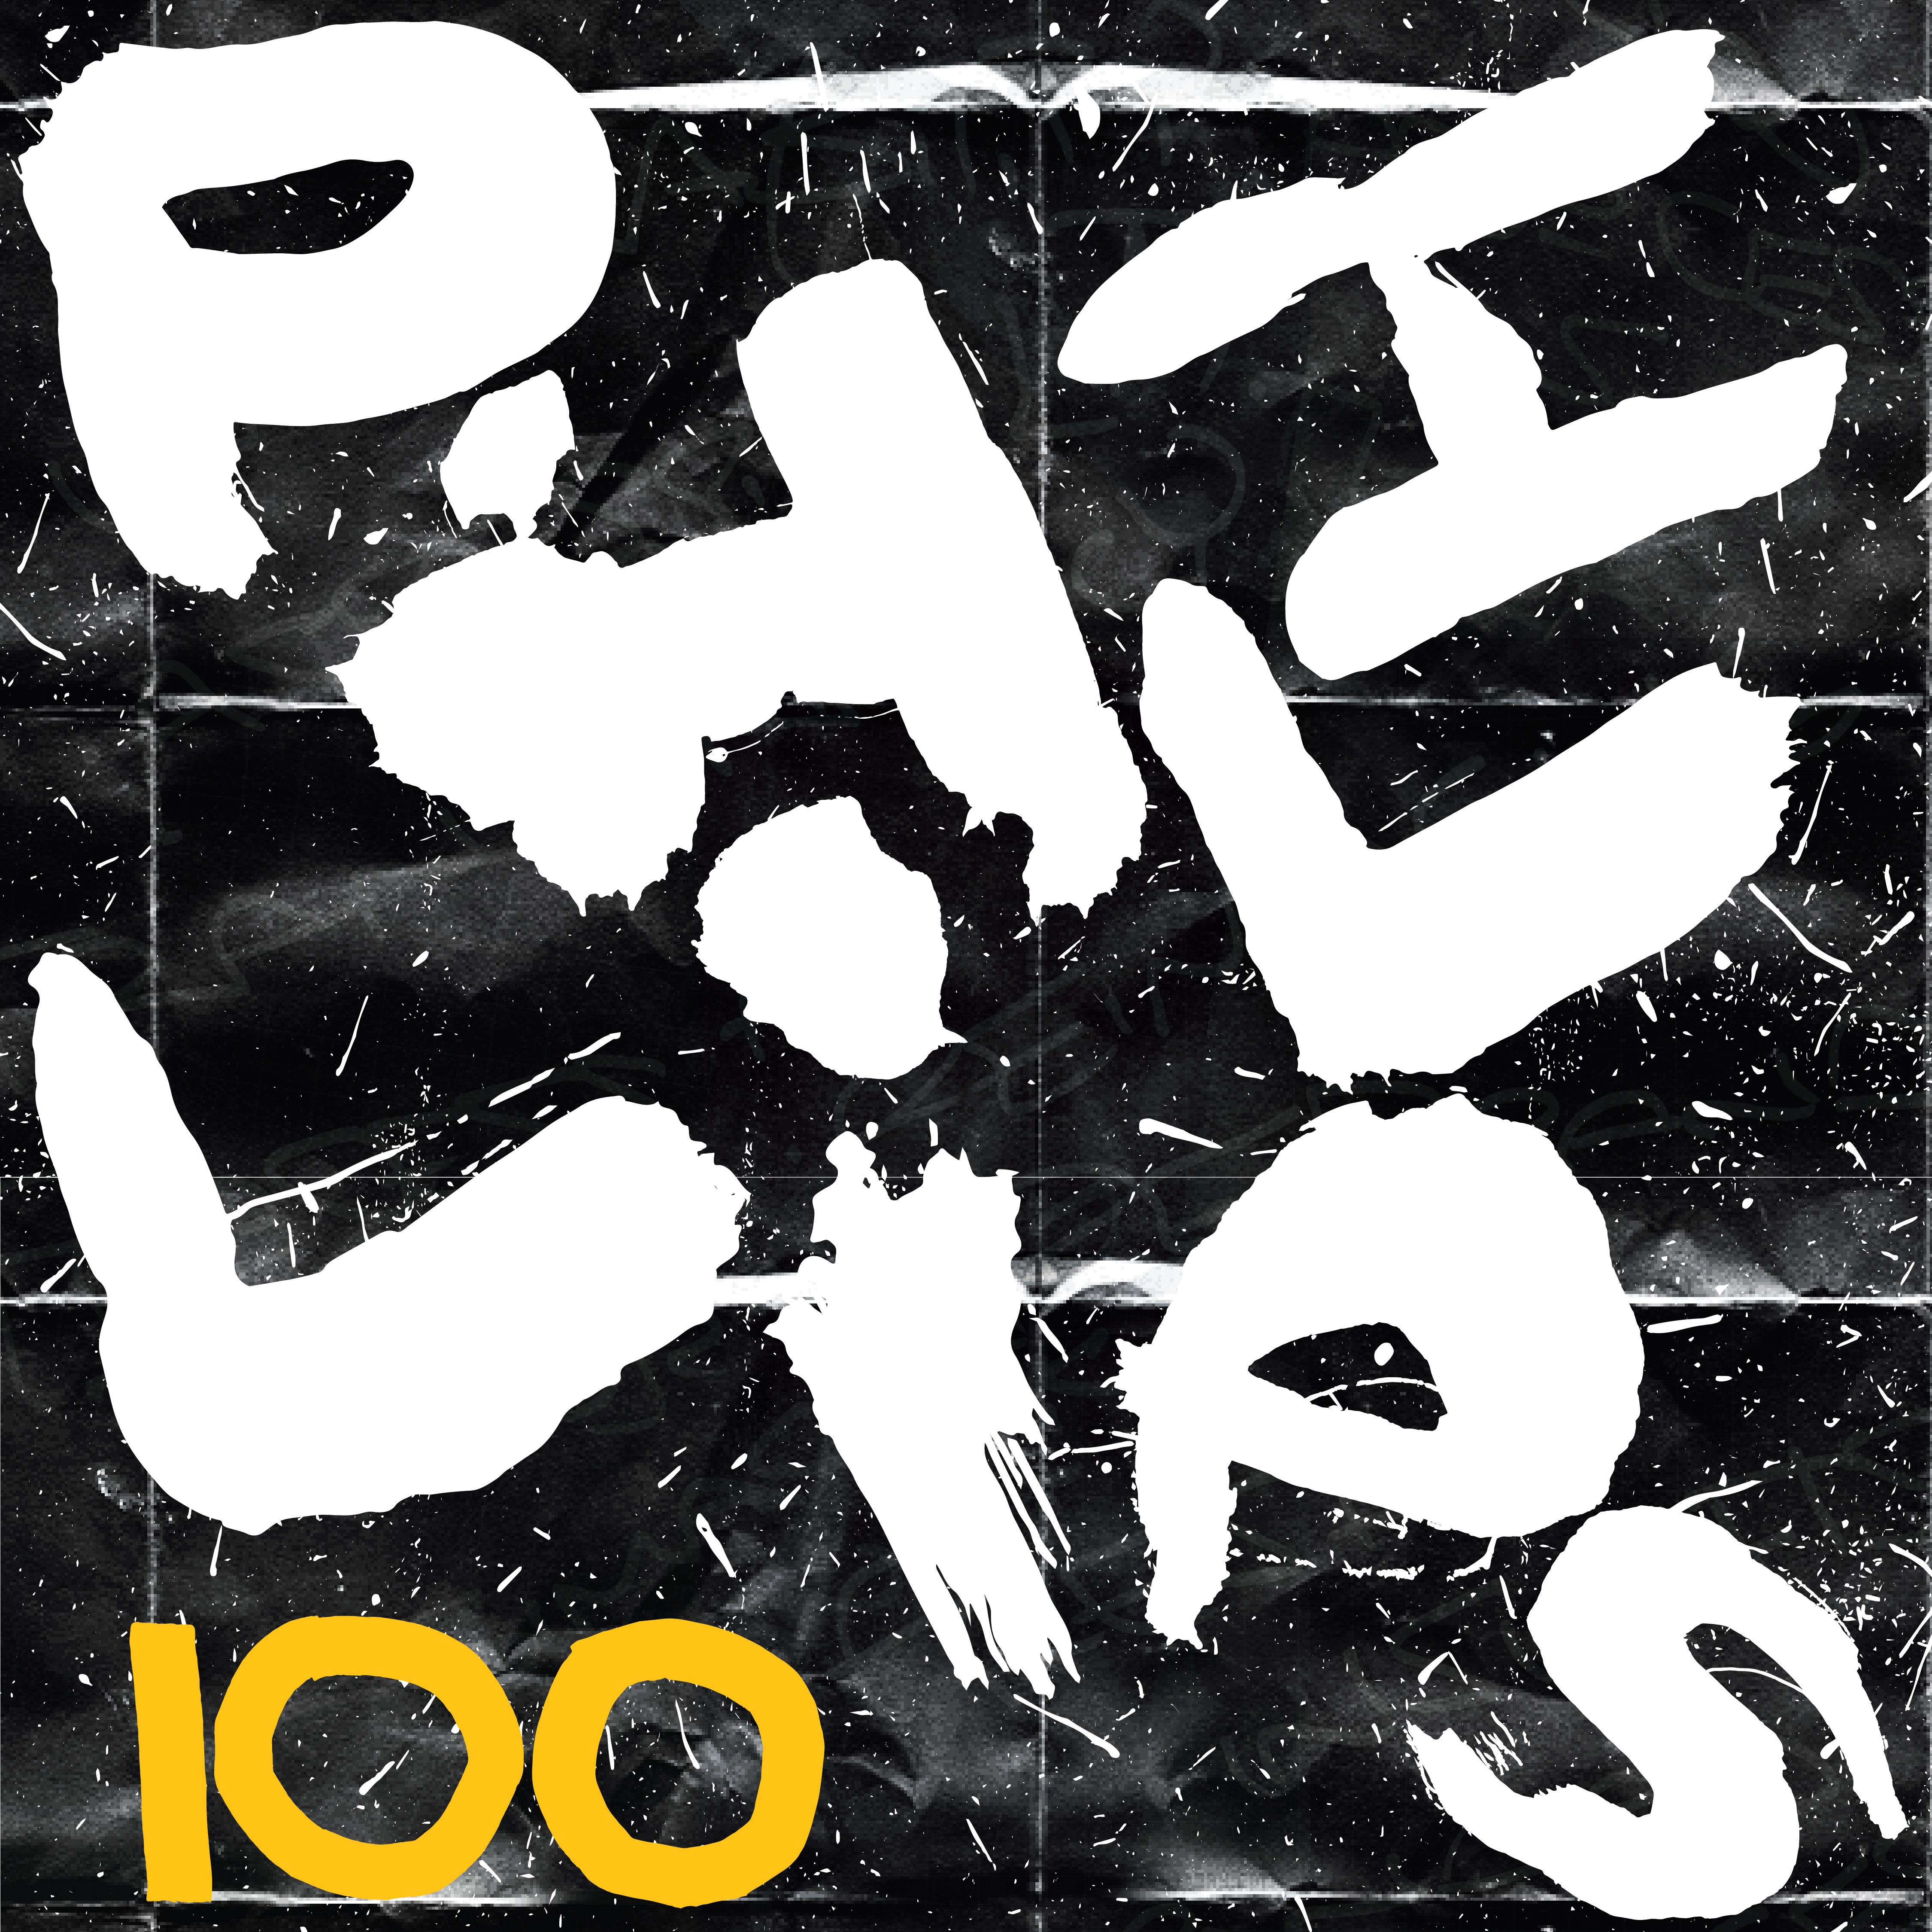 Phillips100 in white graffiti-like text on black background